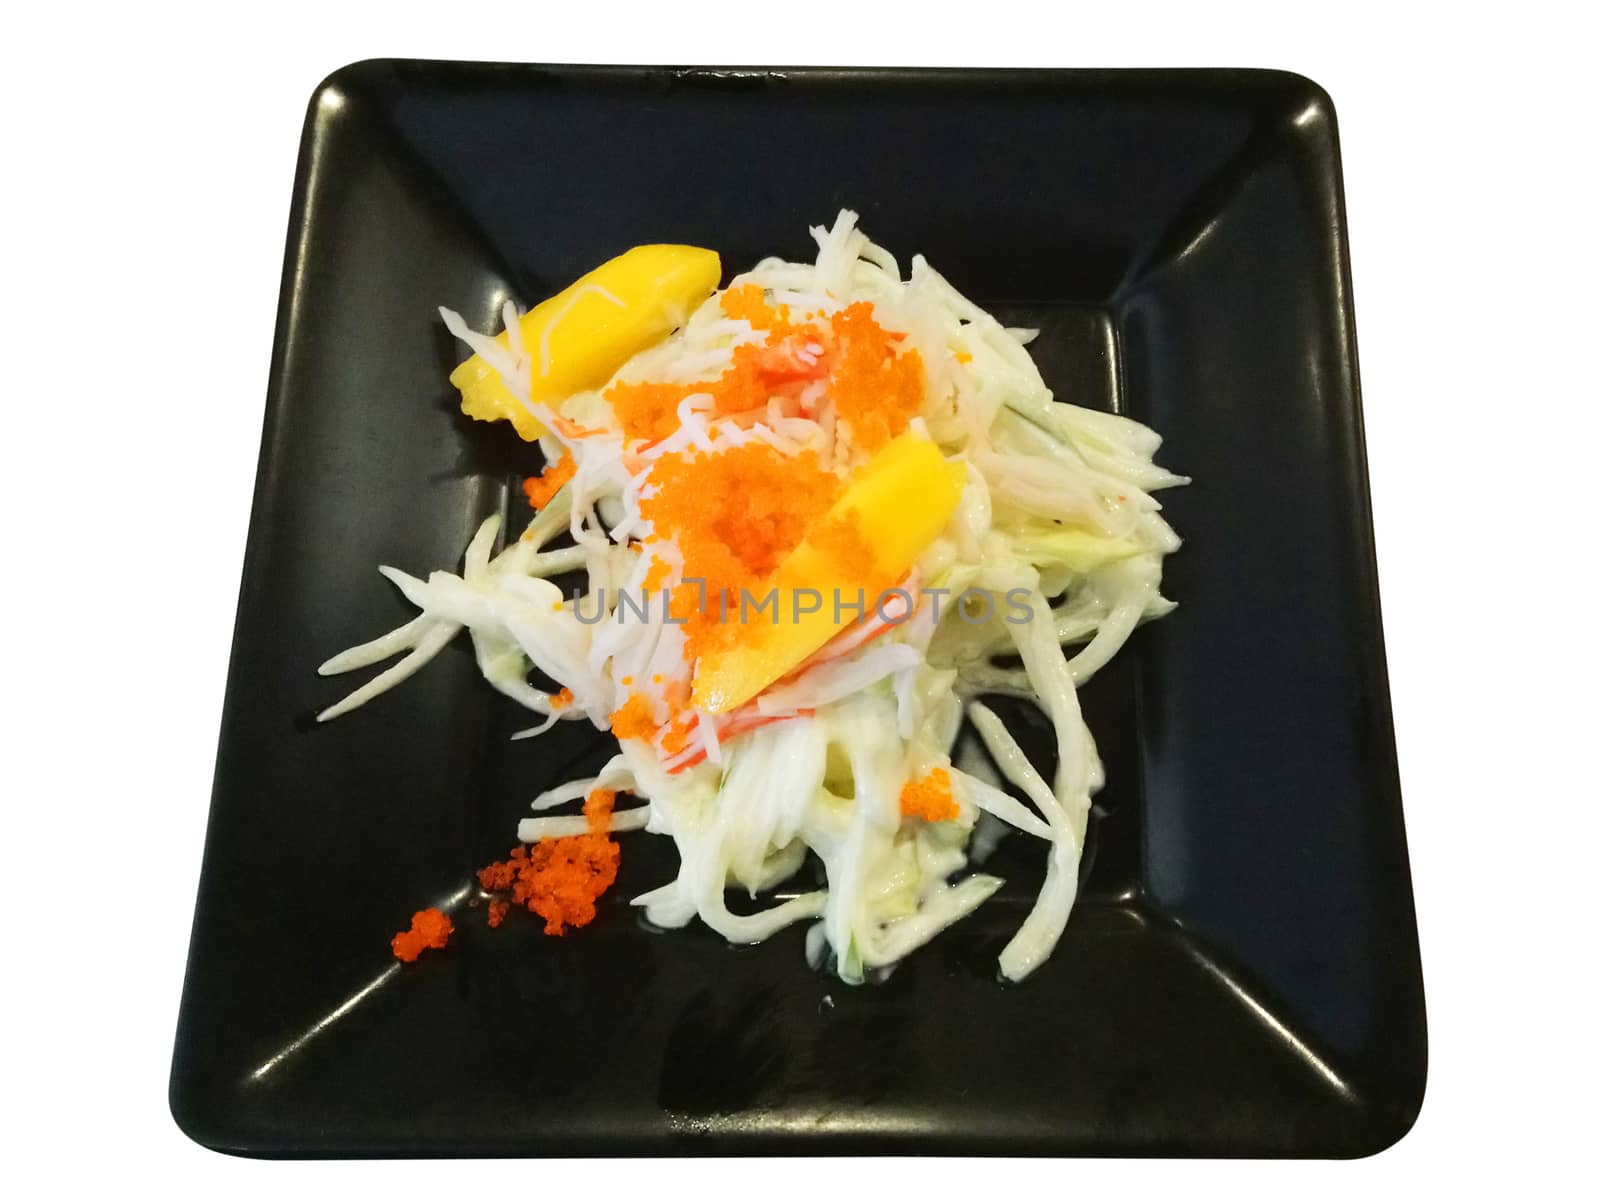 Kani vegetable salad Japanese food serve in the restaurant menu